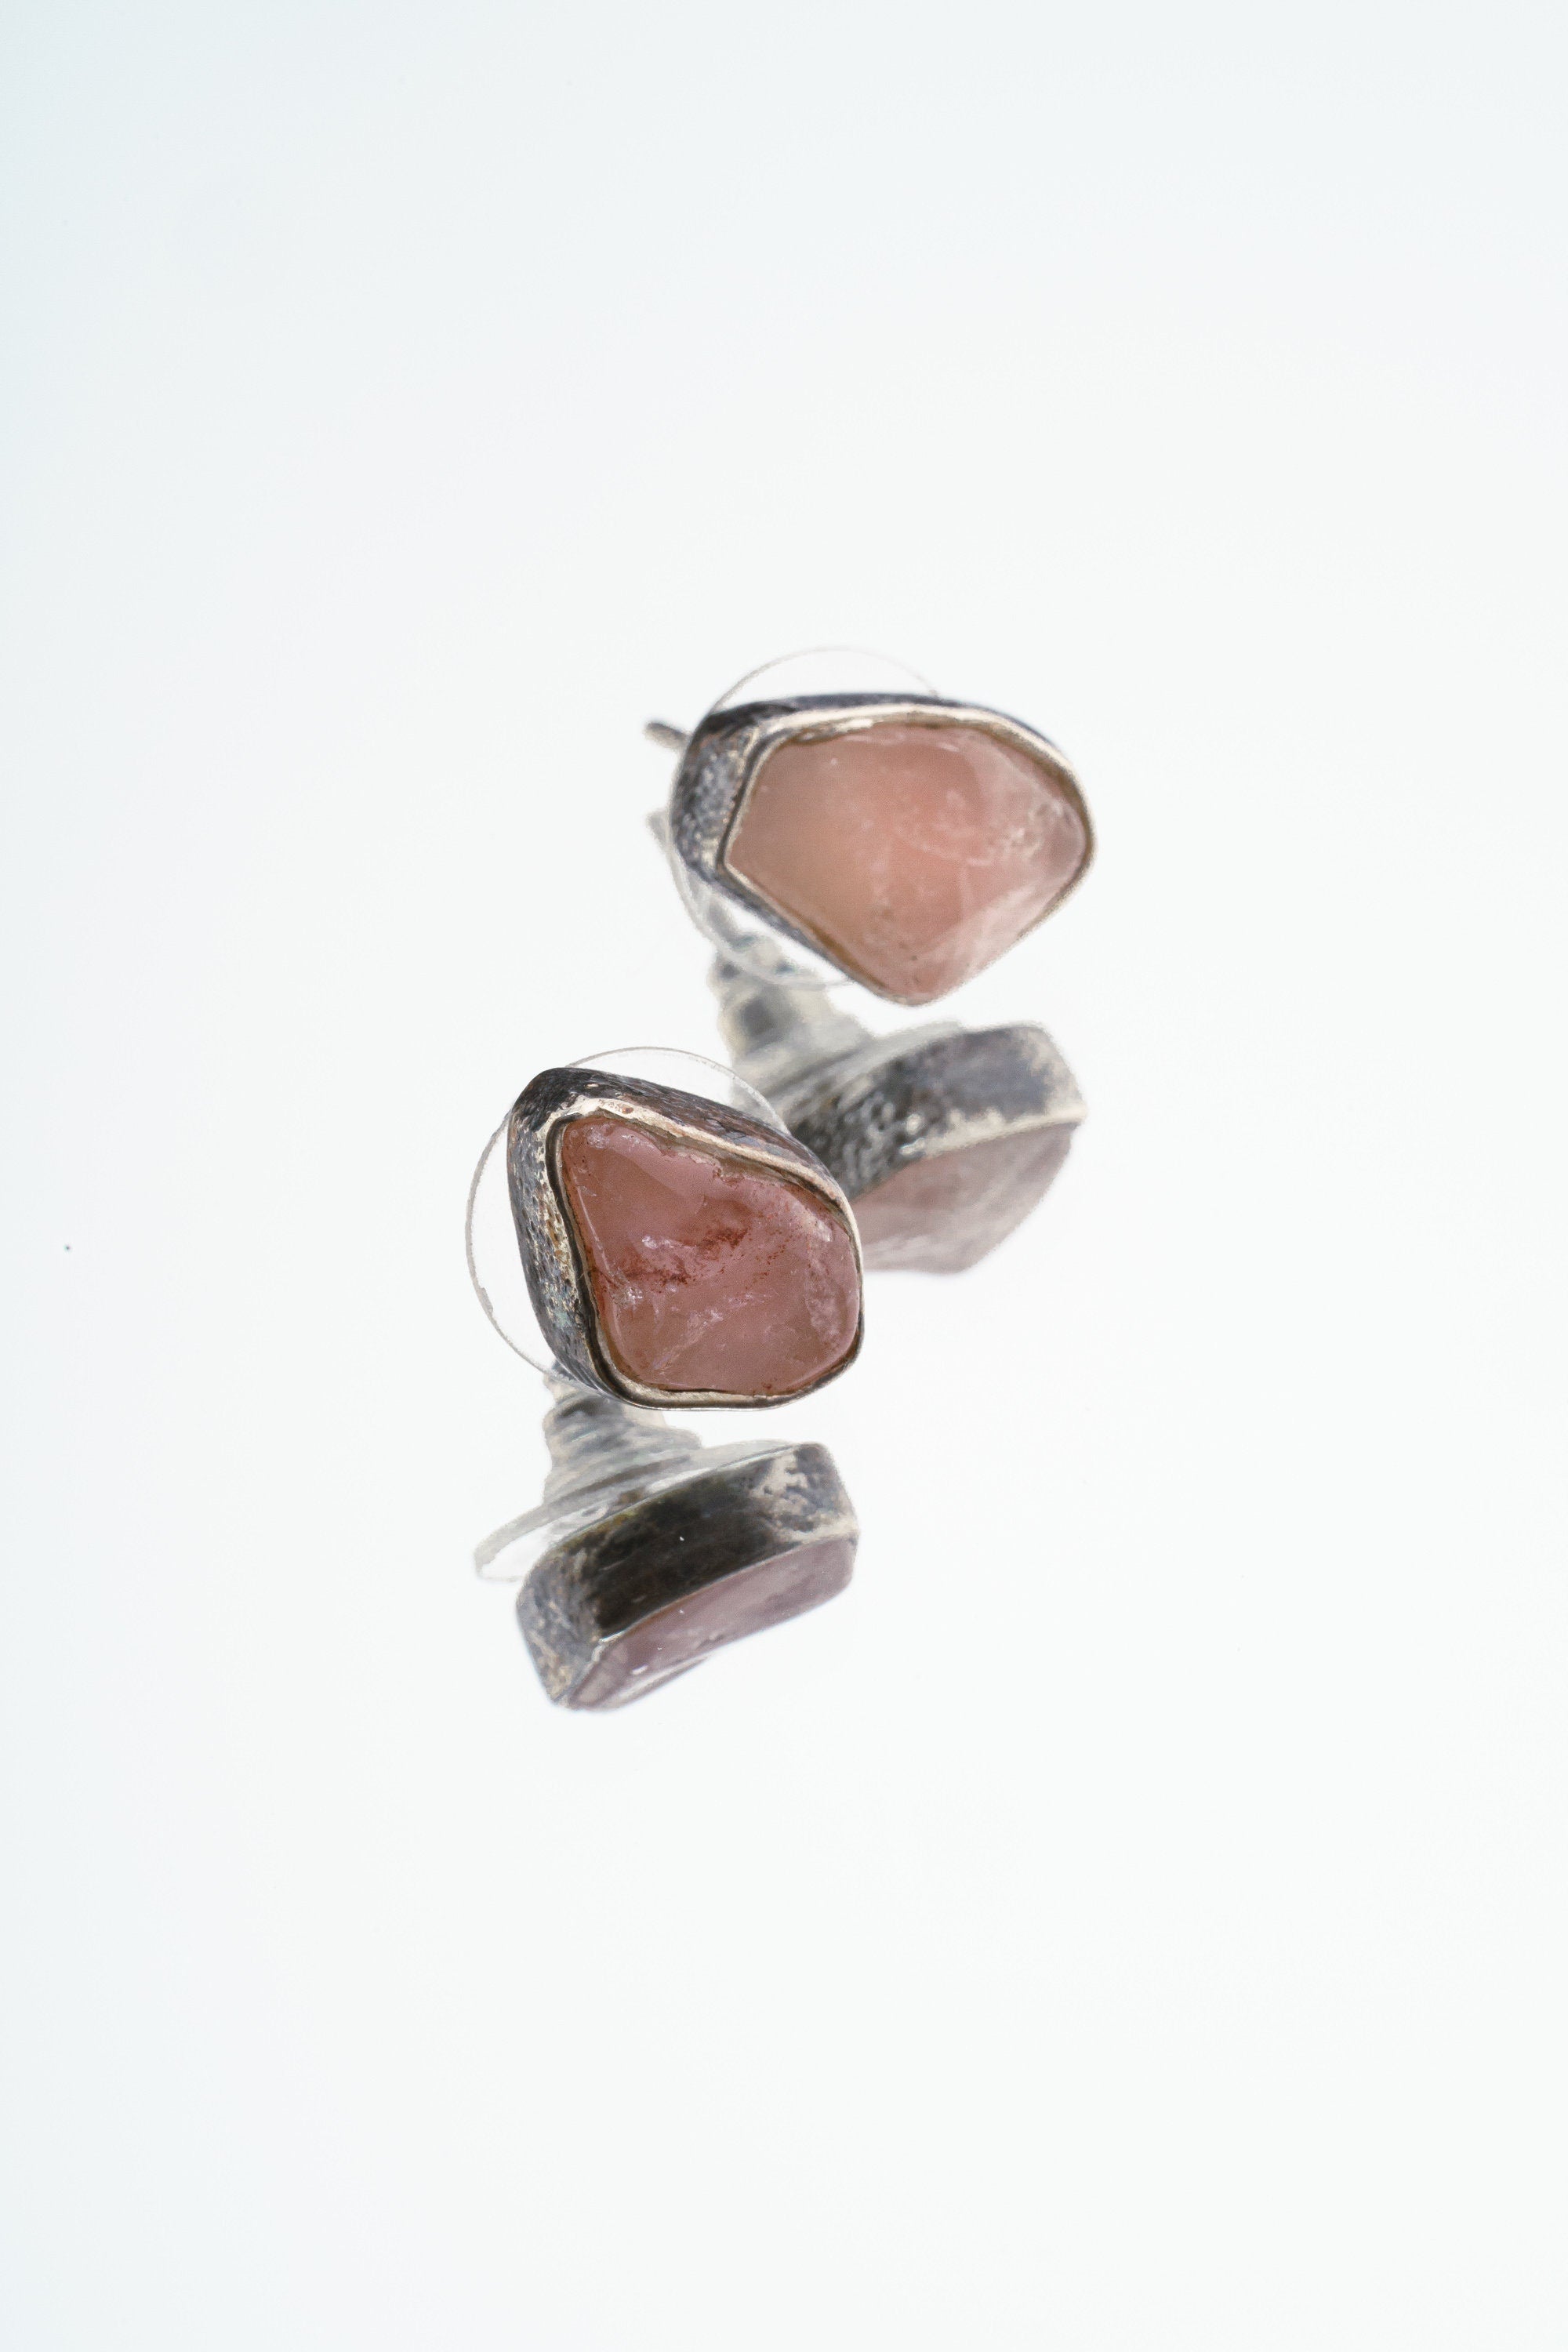 Rose Quartz Stud - organic shaped Pair - Sterling Silver - Oxidised & Textured Finish - Freeform Earring Studs